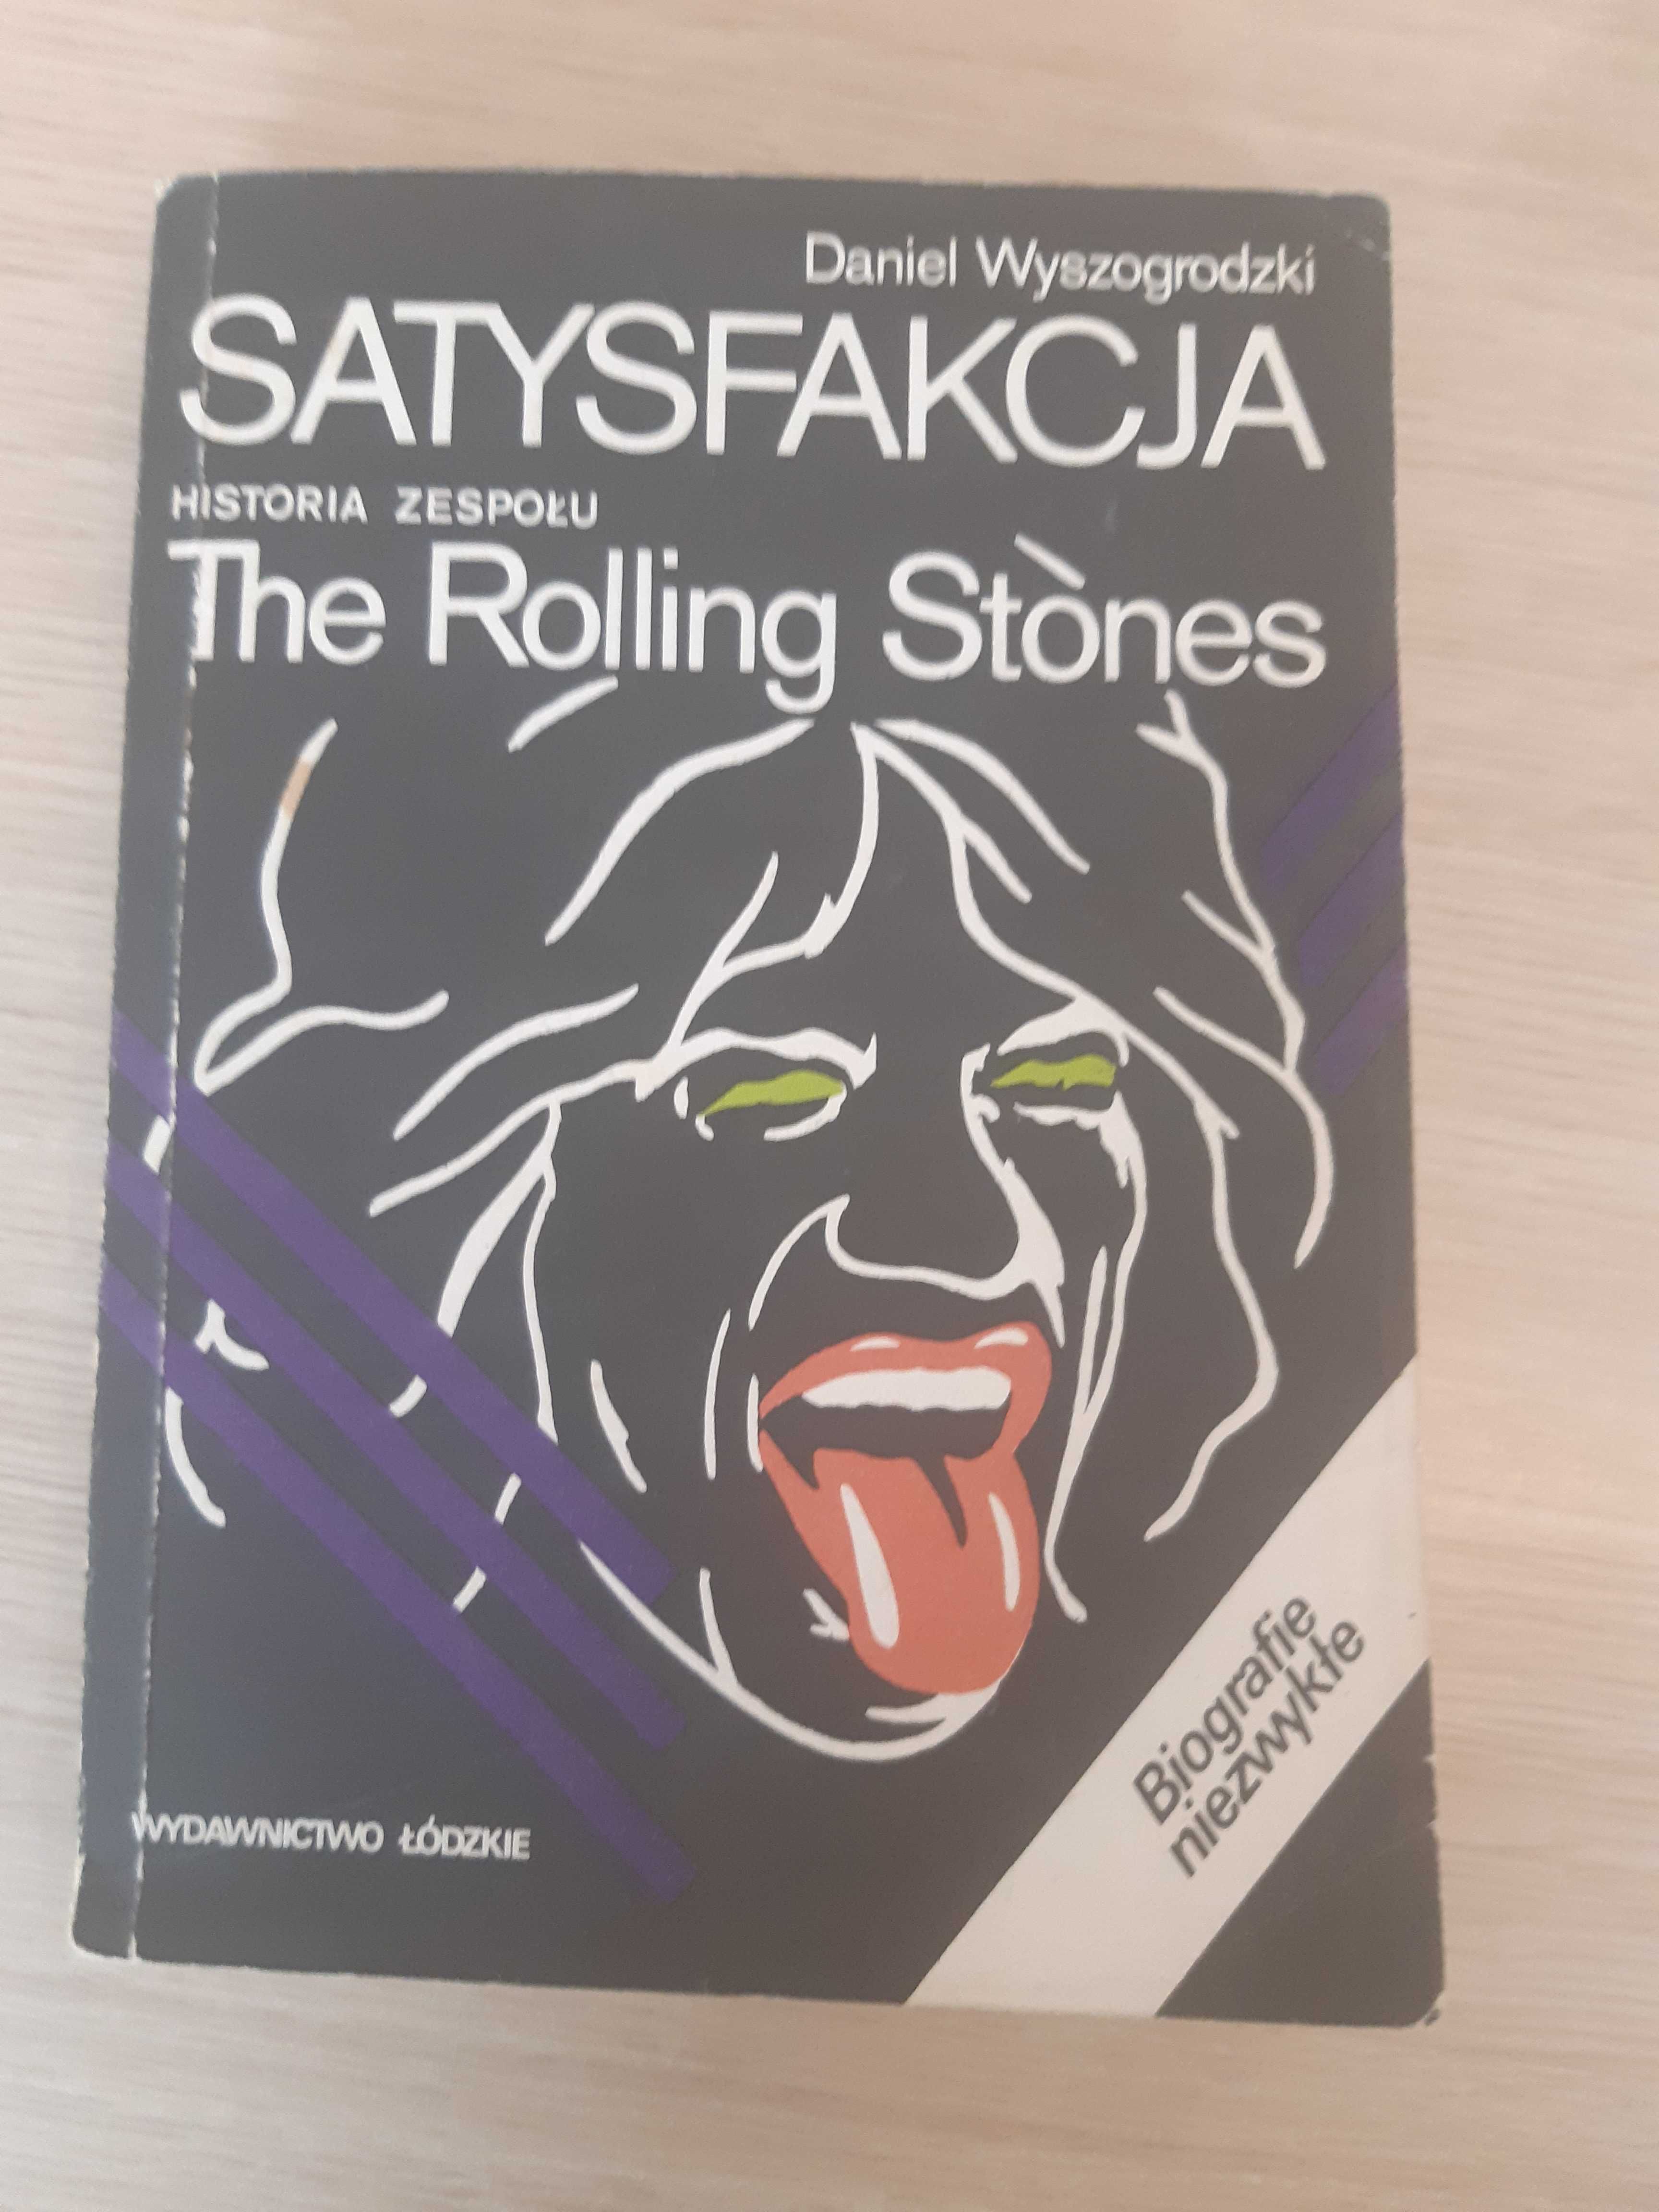 Satysfakcja-historia zespołu The Rolling Stones